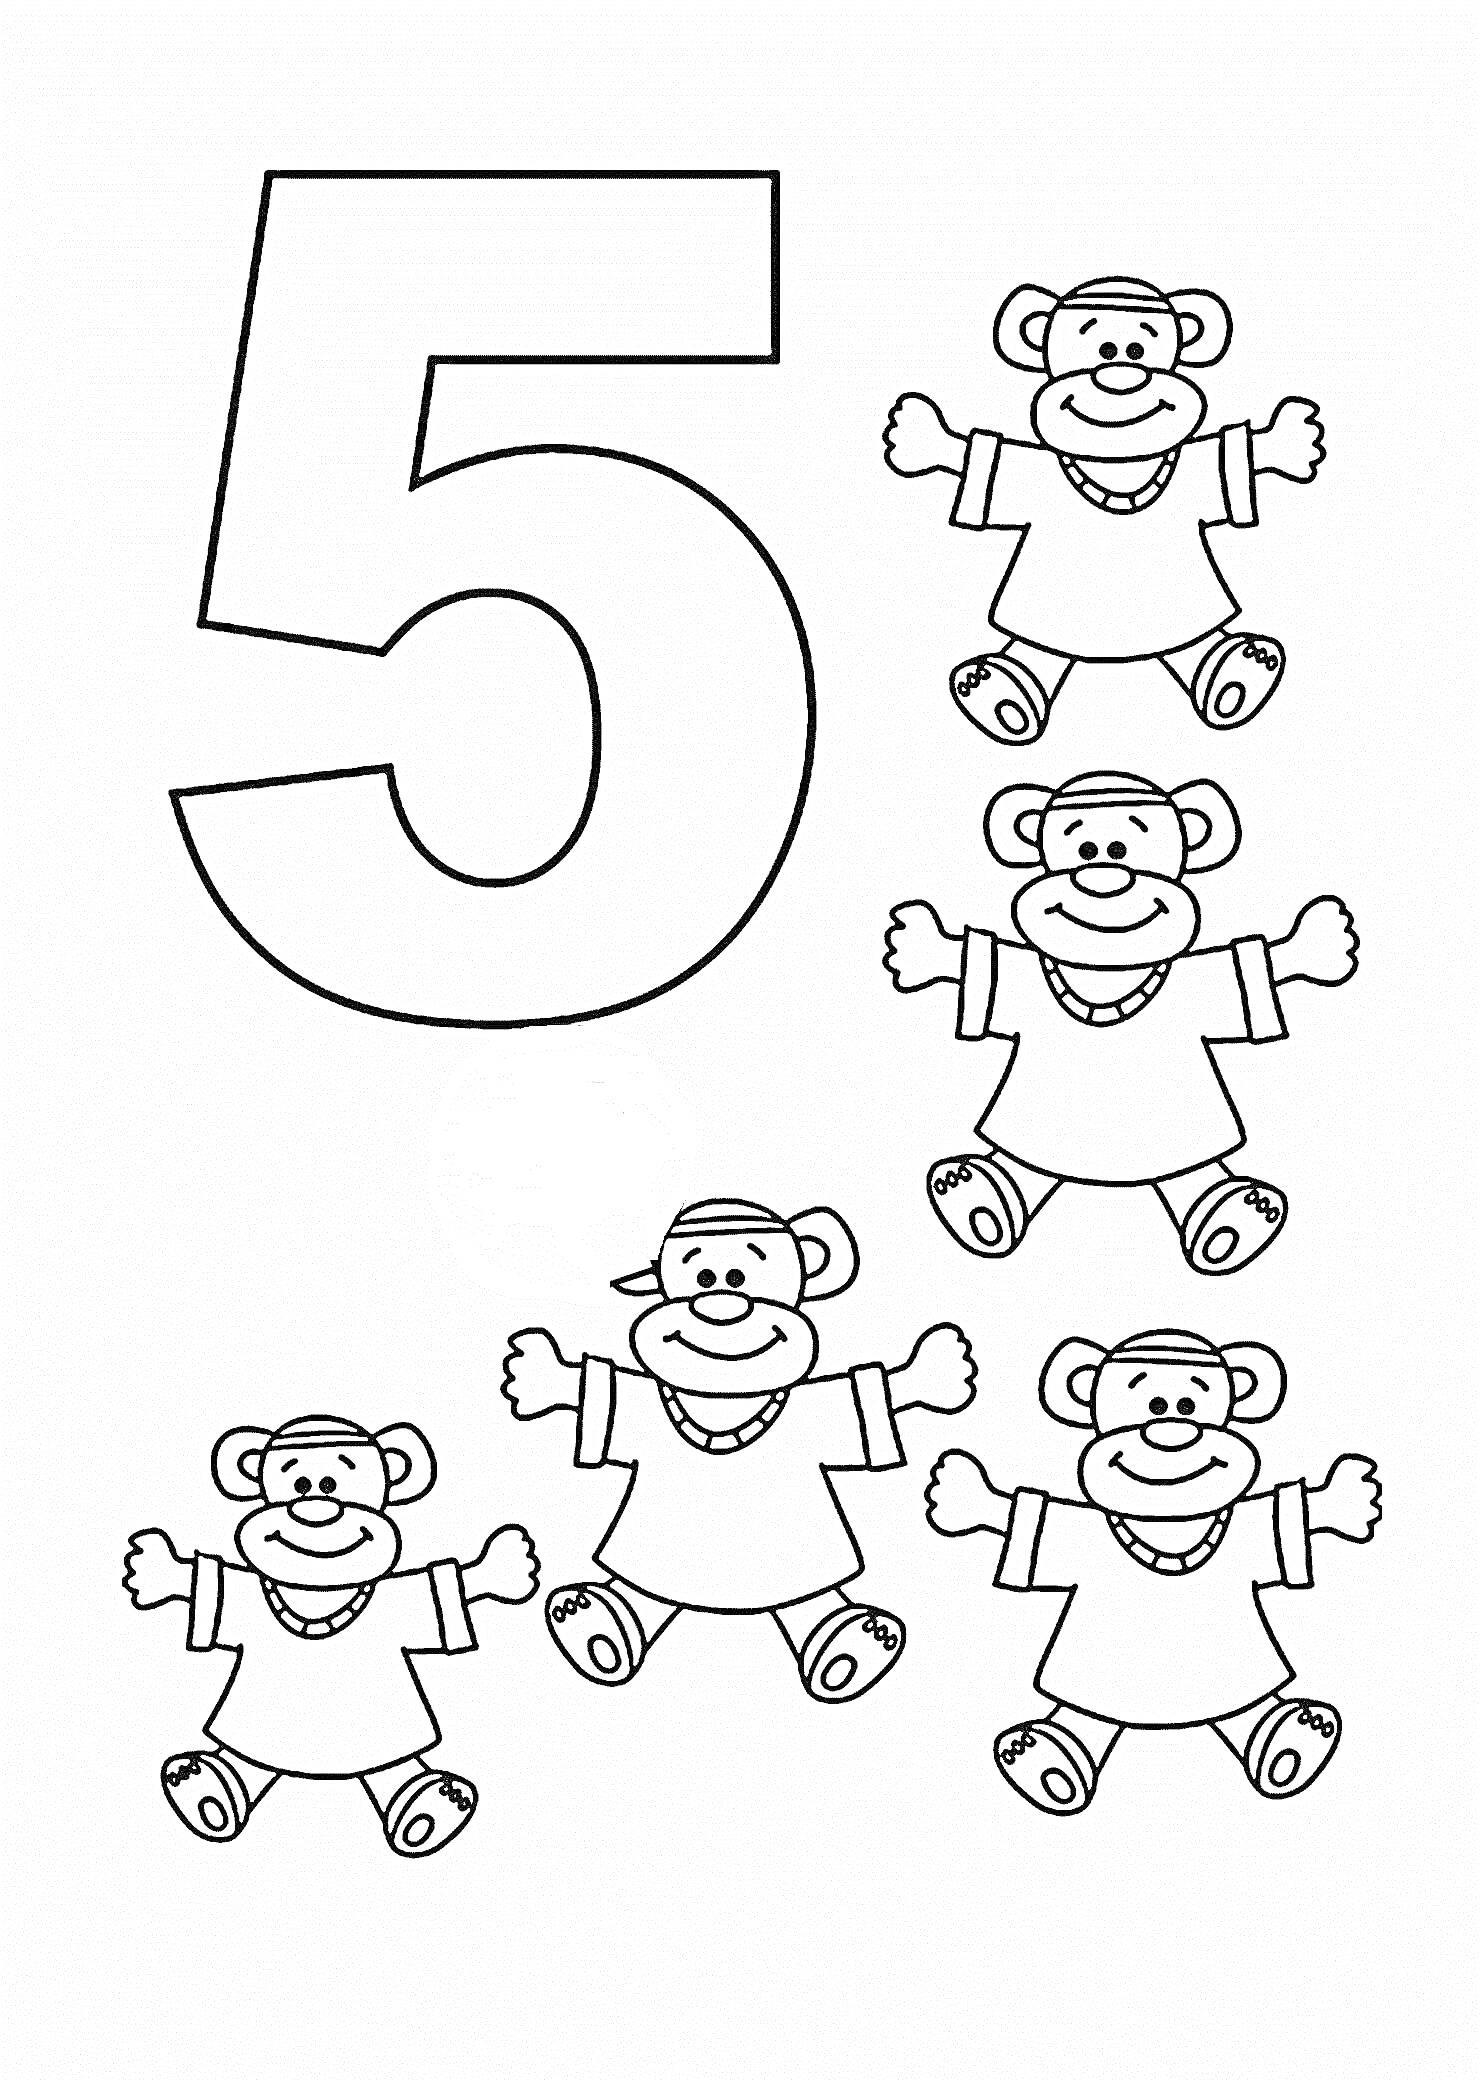 Раскраска Цифра 5 с пятью обезьянками